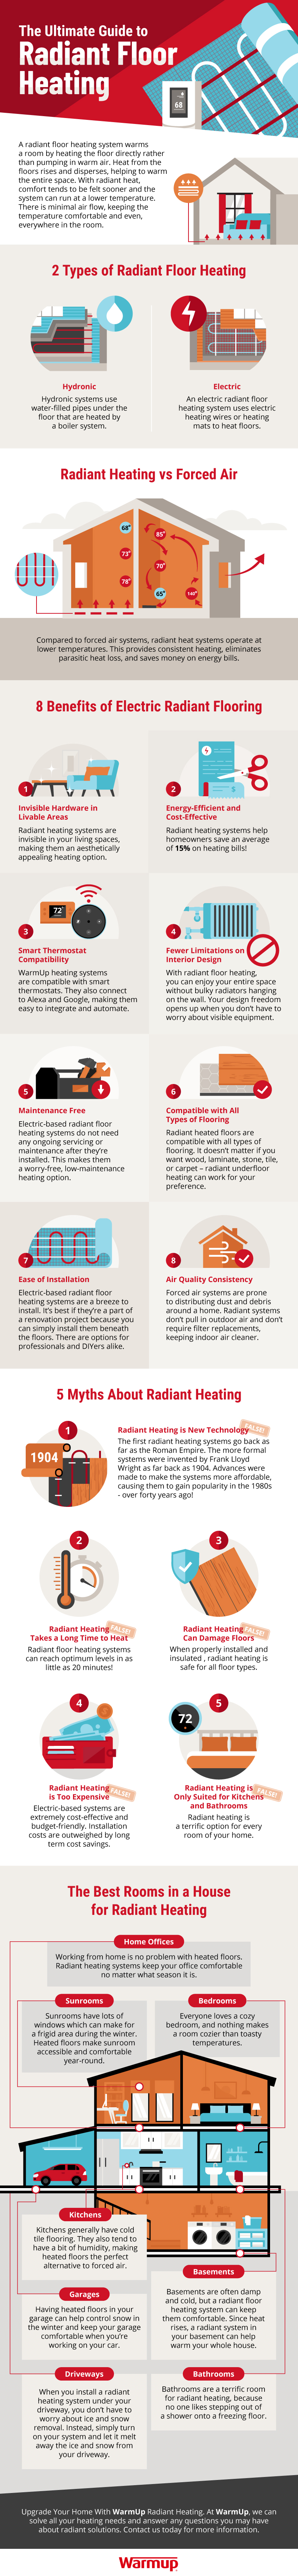 The-Ultimate-Guide-to-Radiant-Floor-Heating-1003.jpg